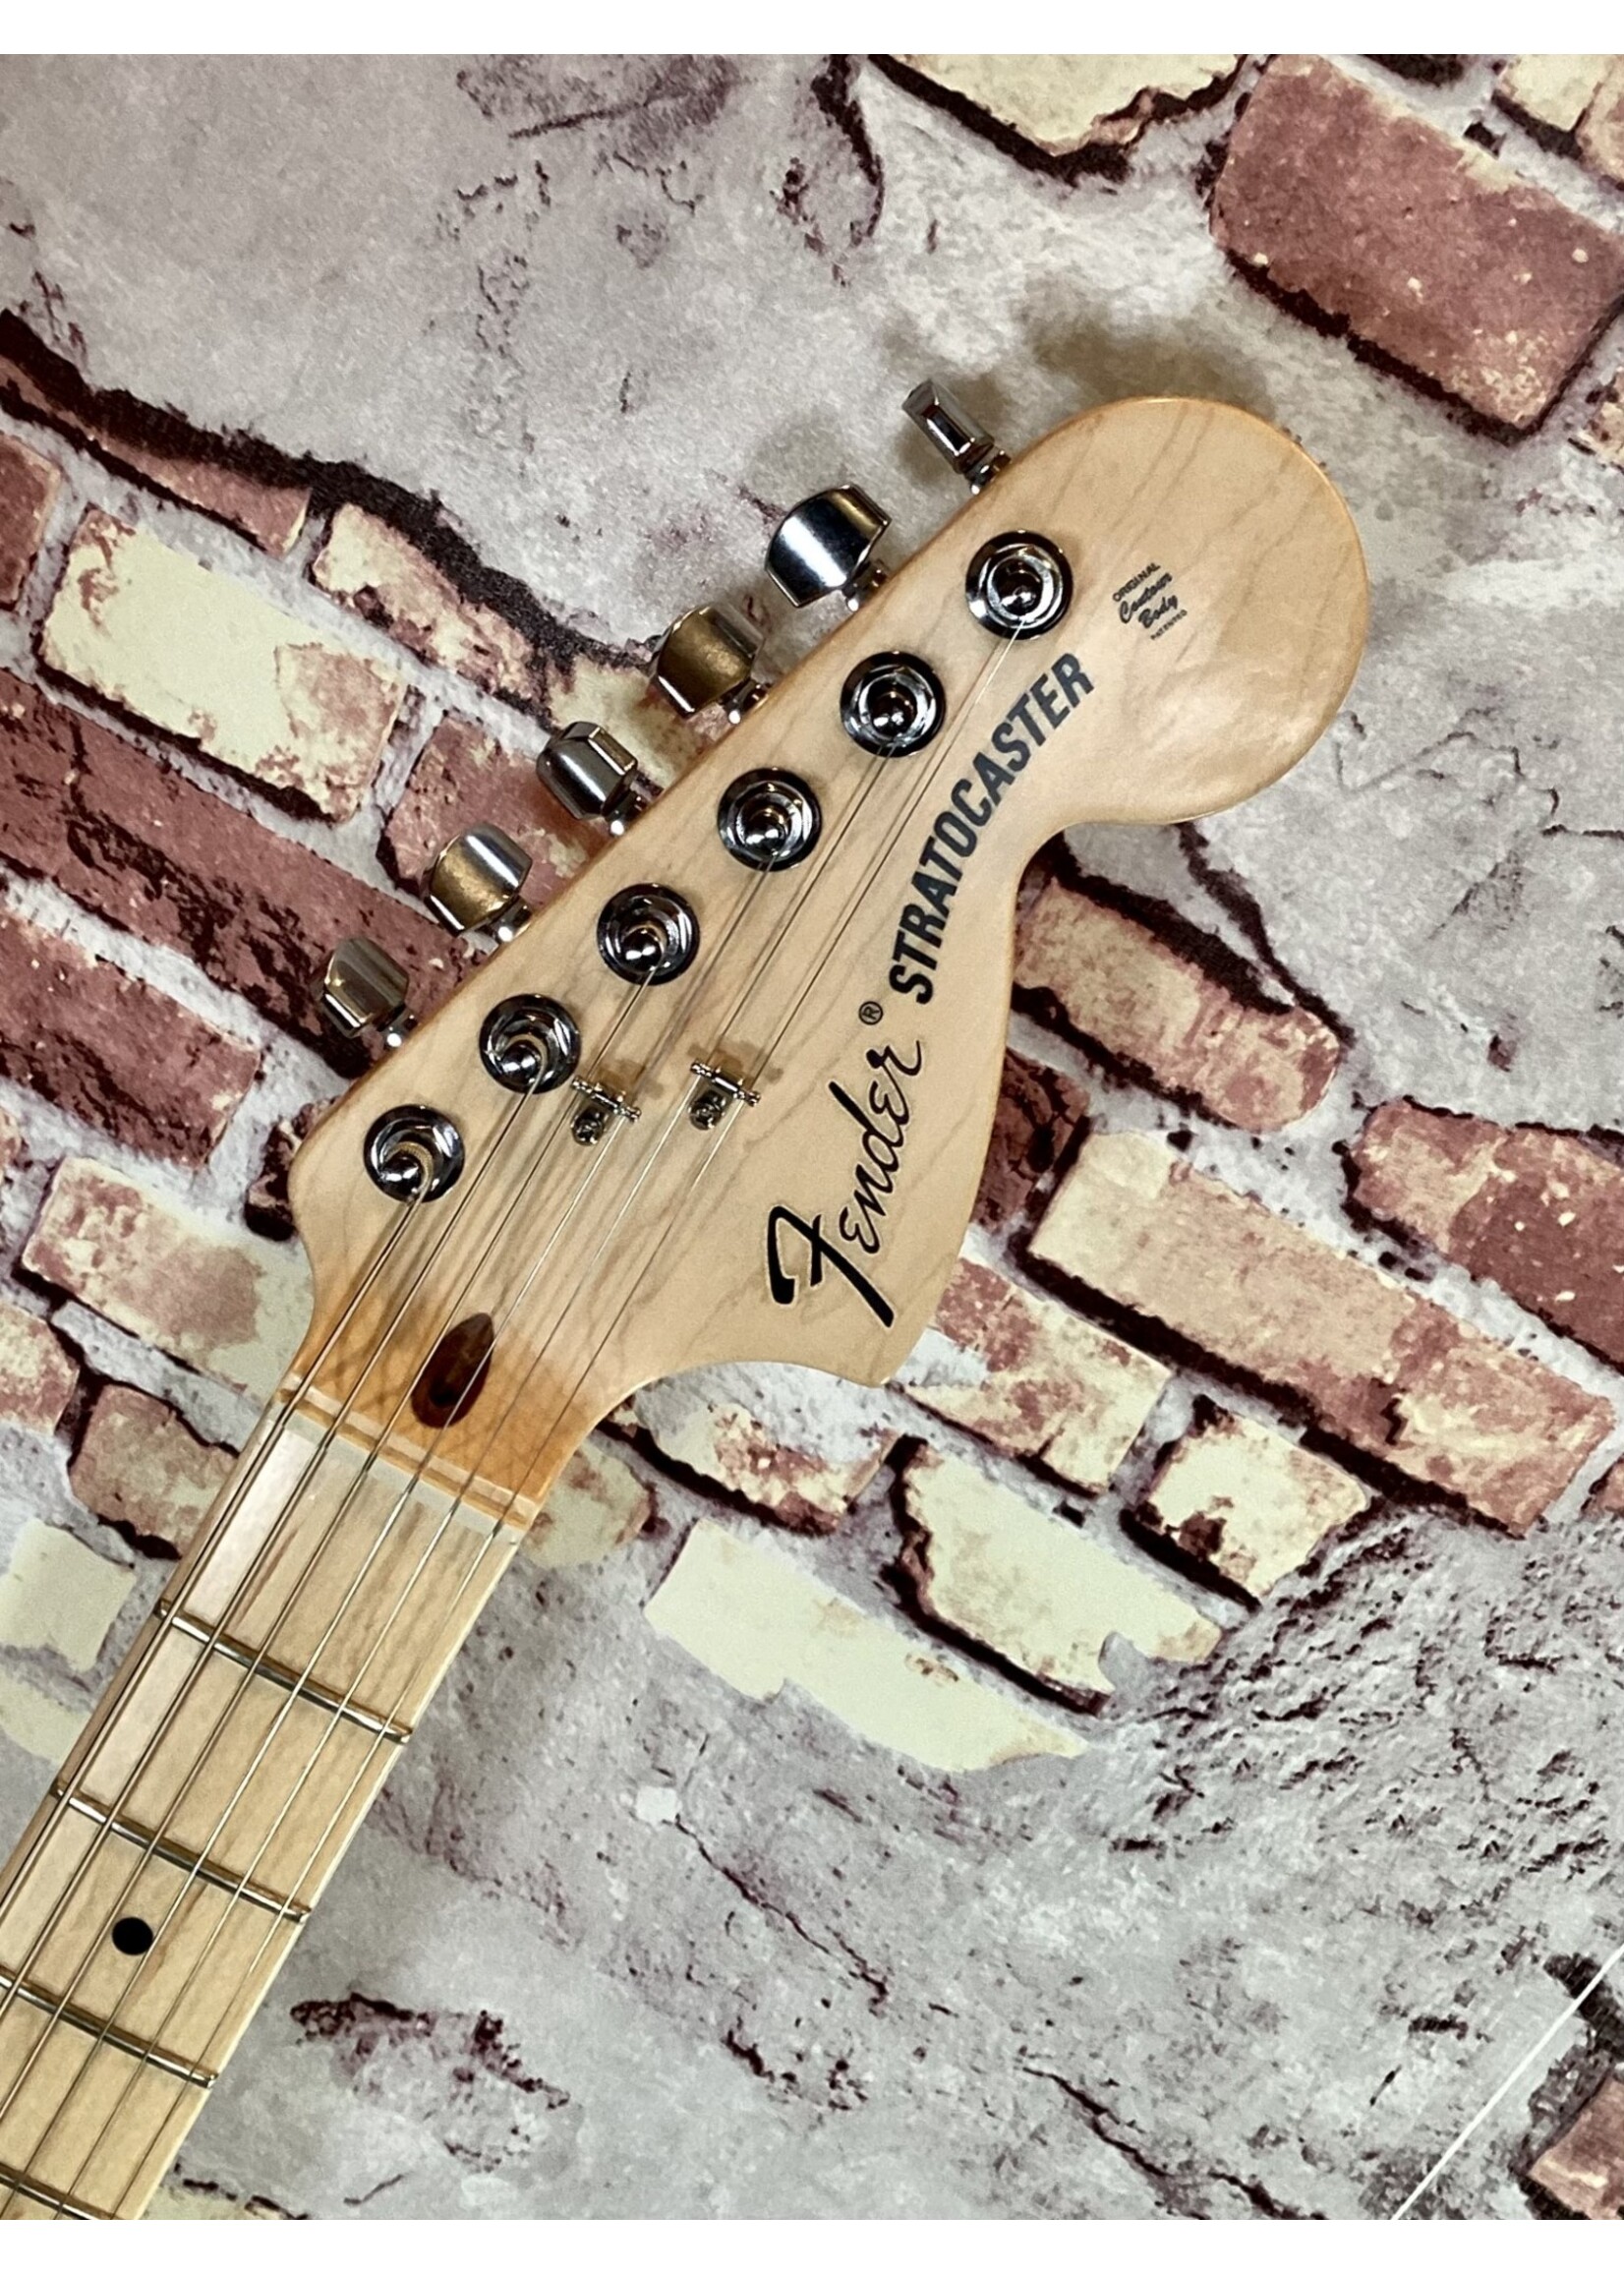 Fender USA Partcaster - preownwed